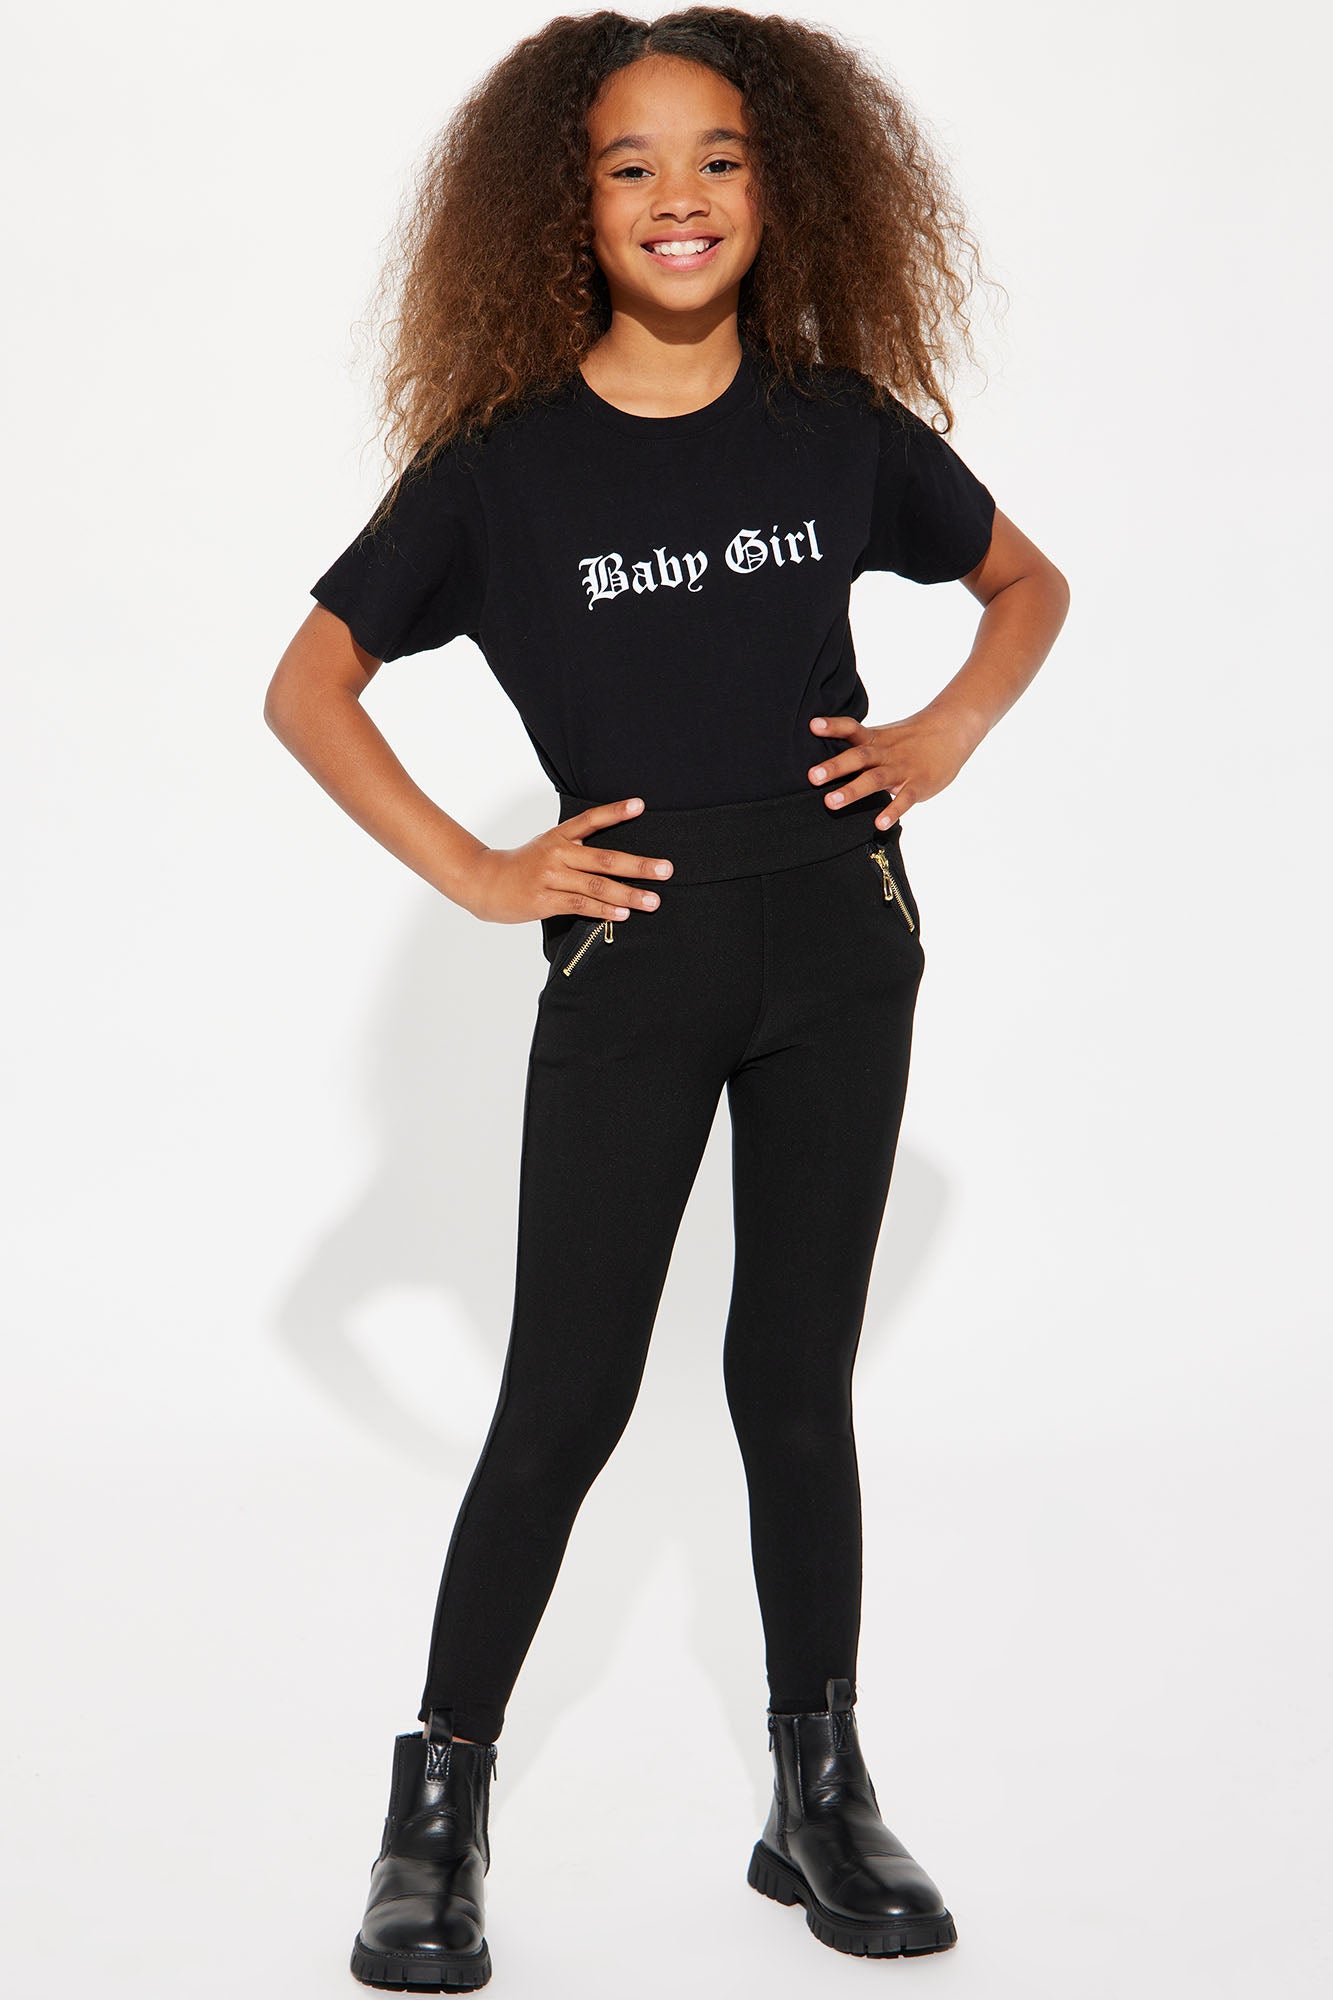 Mini Runway Girl Legging - Black, Fashion Nova, Kids Leggings